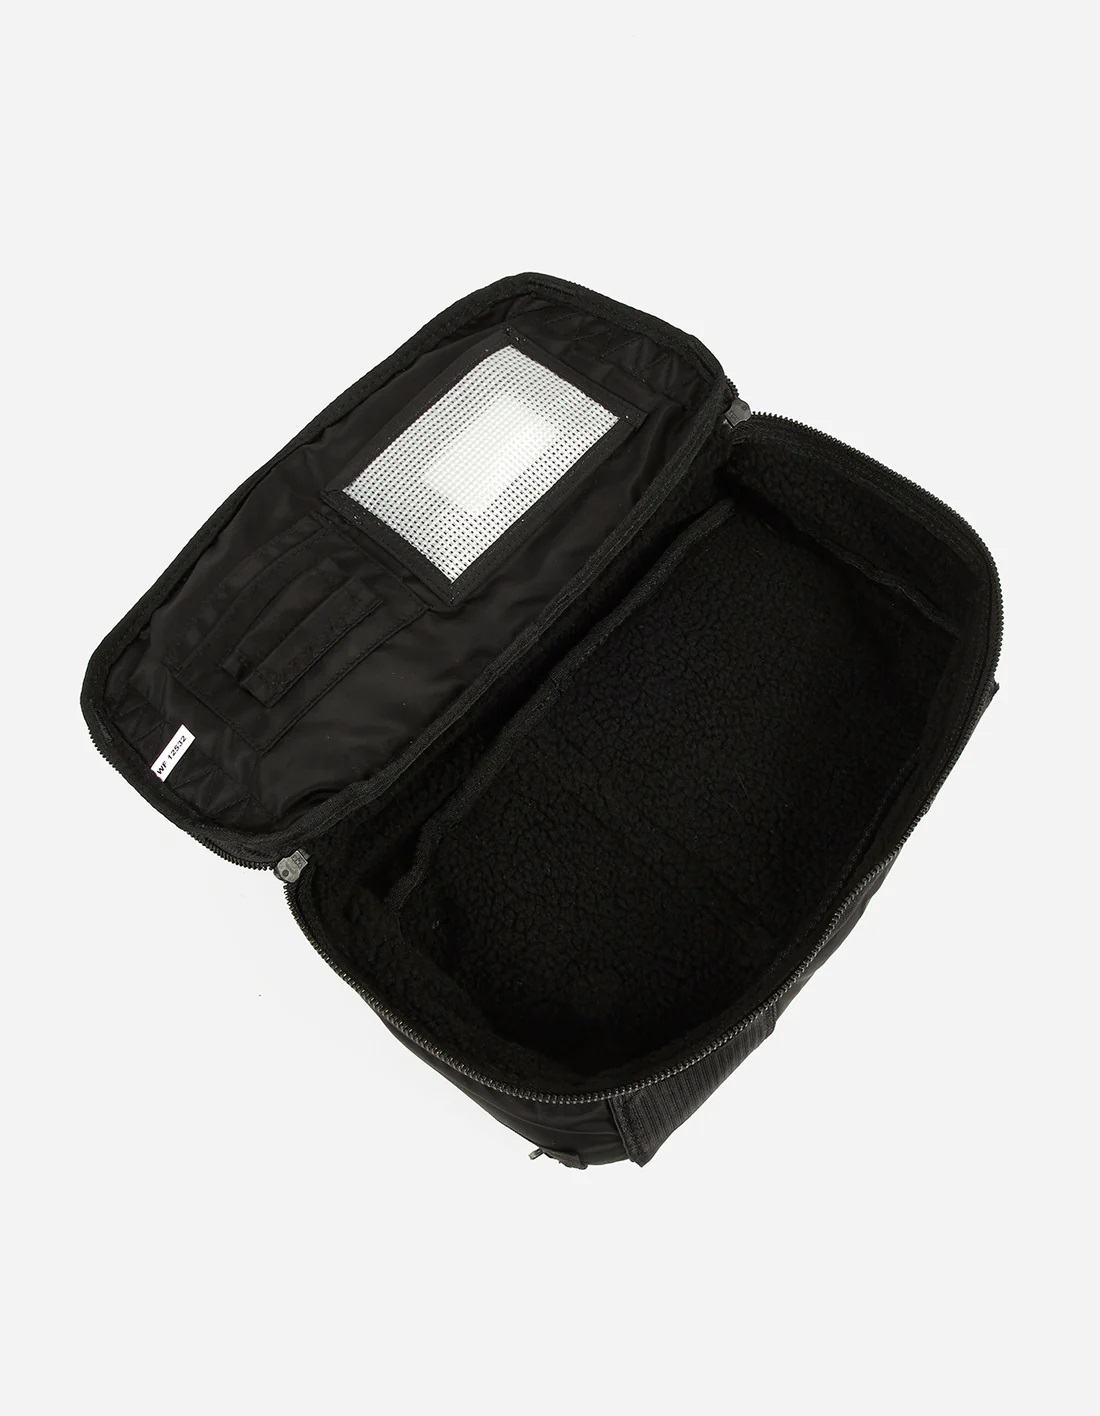 MAHARISHI 9636 Travel Waist Bag in Black